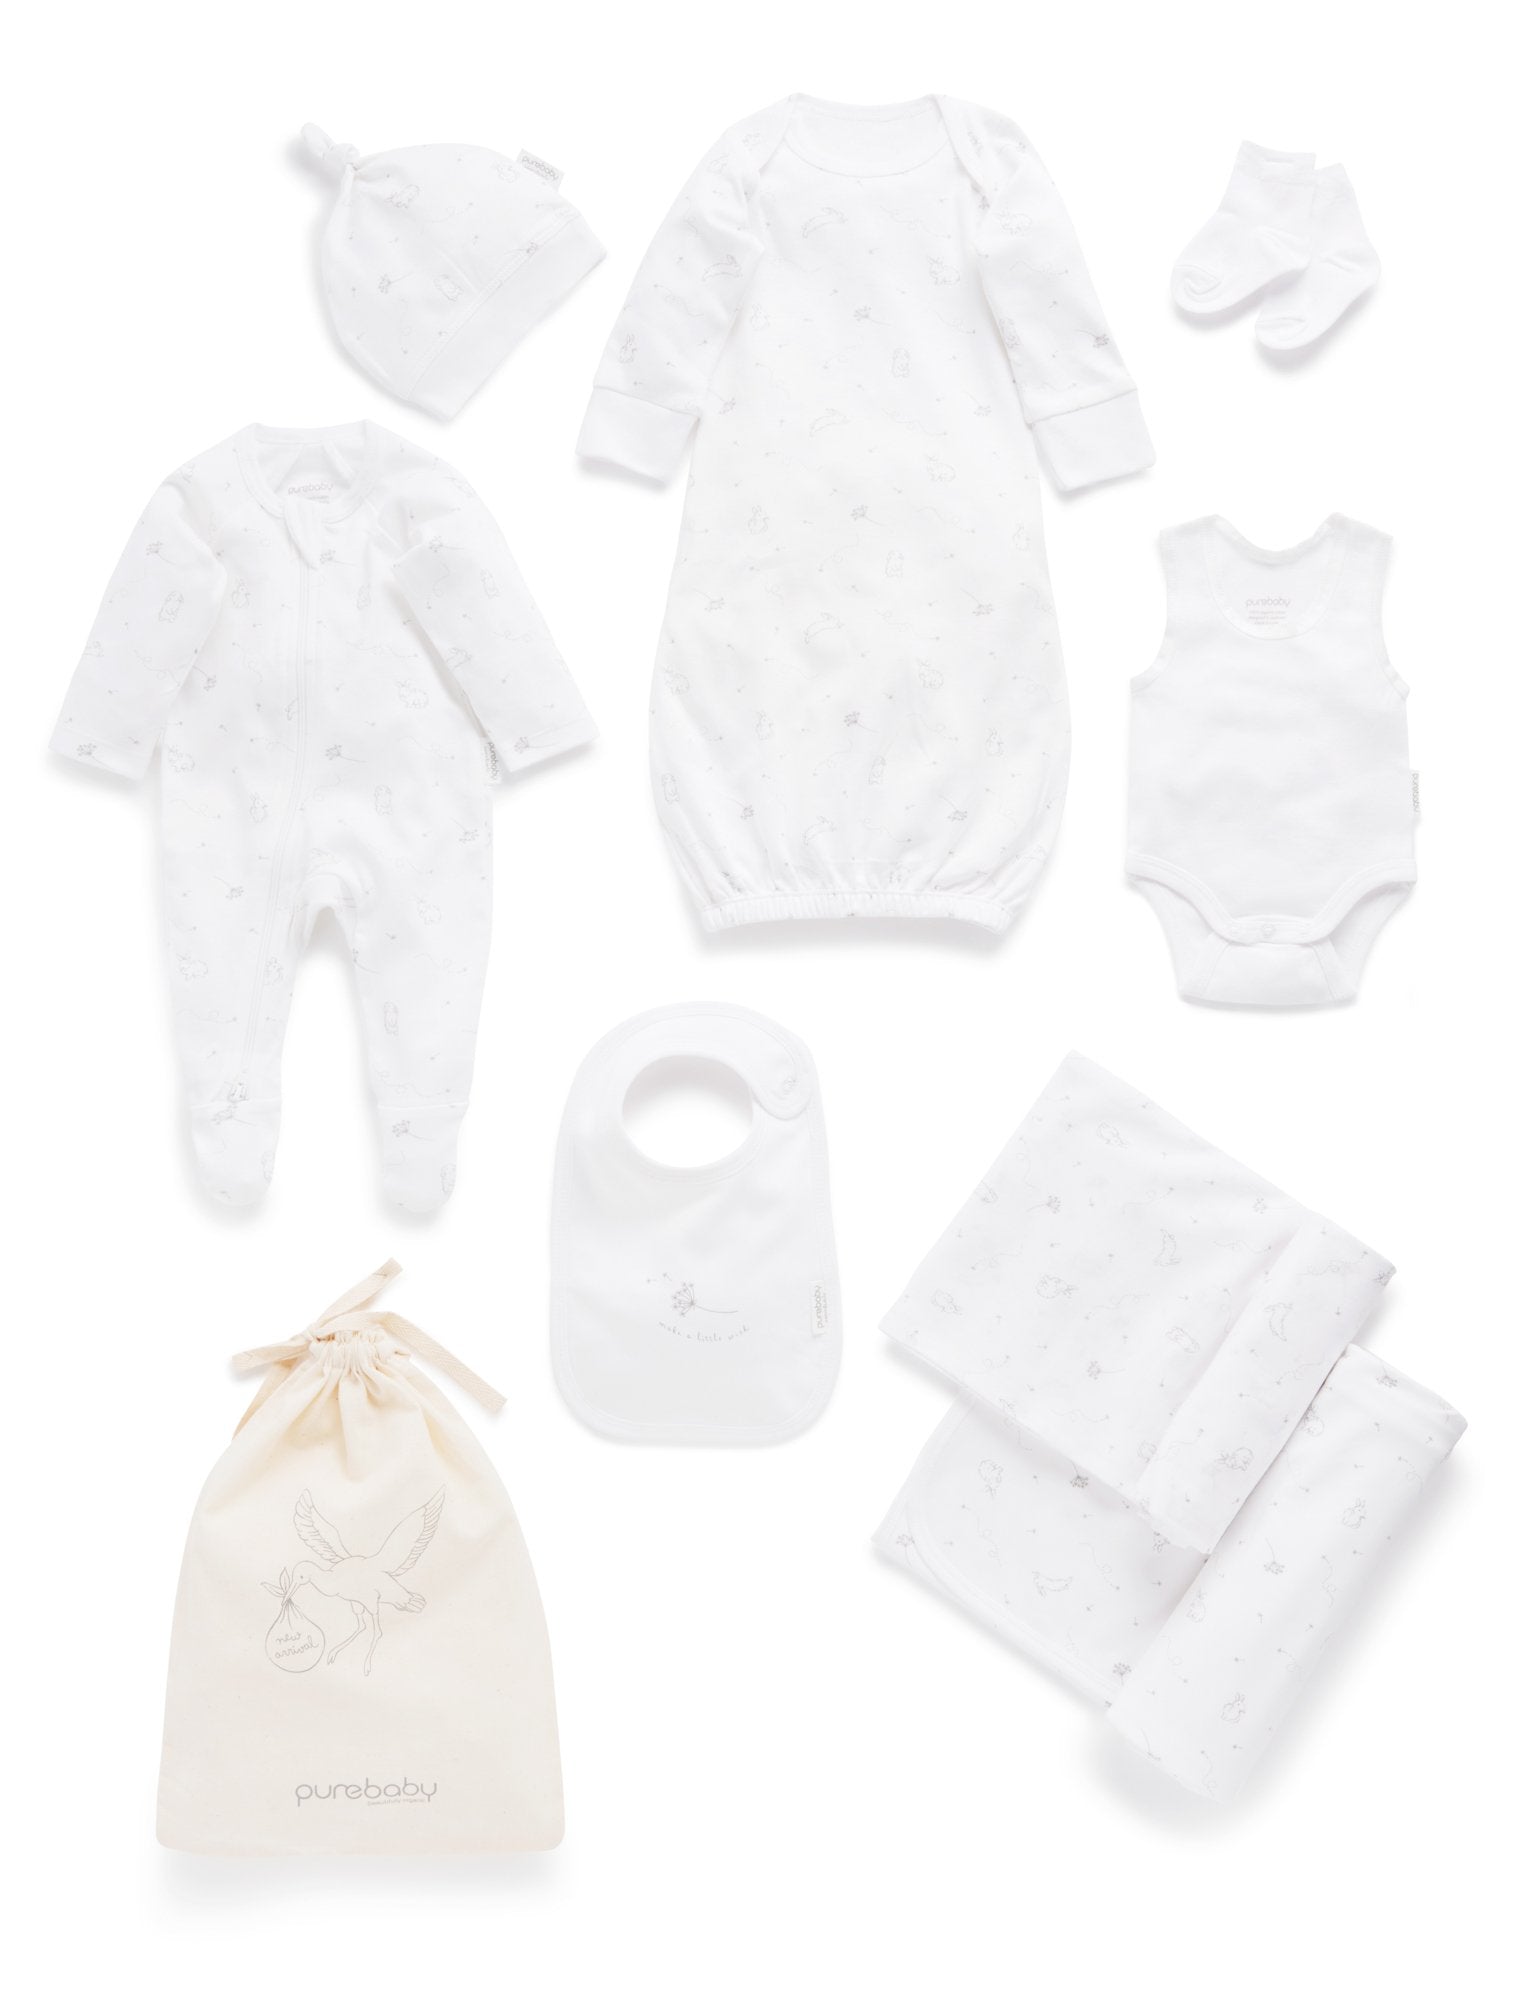 Newborn Starter Essentials in Calico Bag